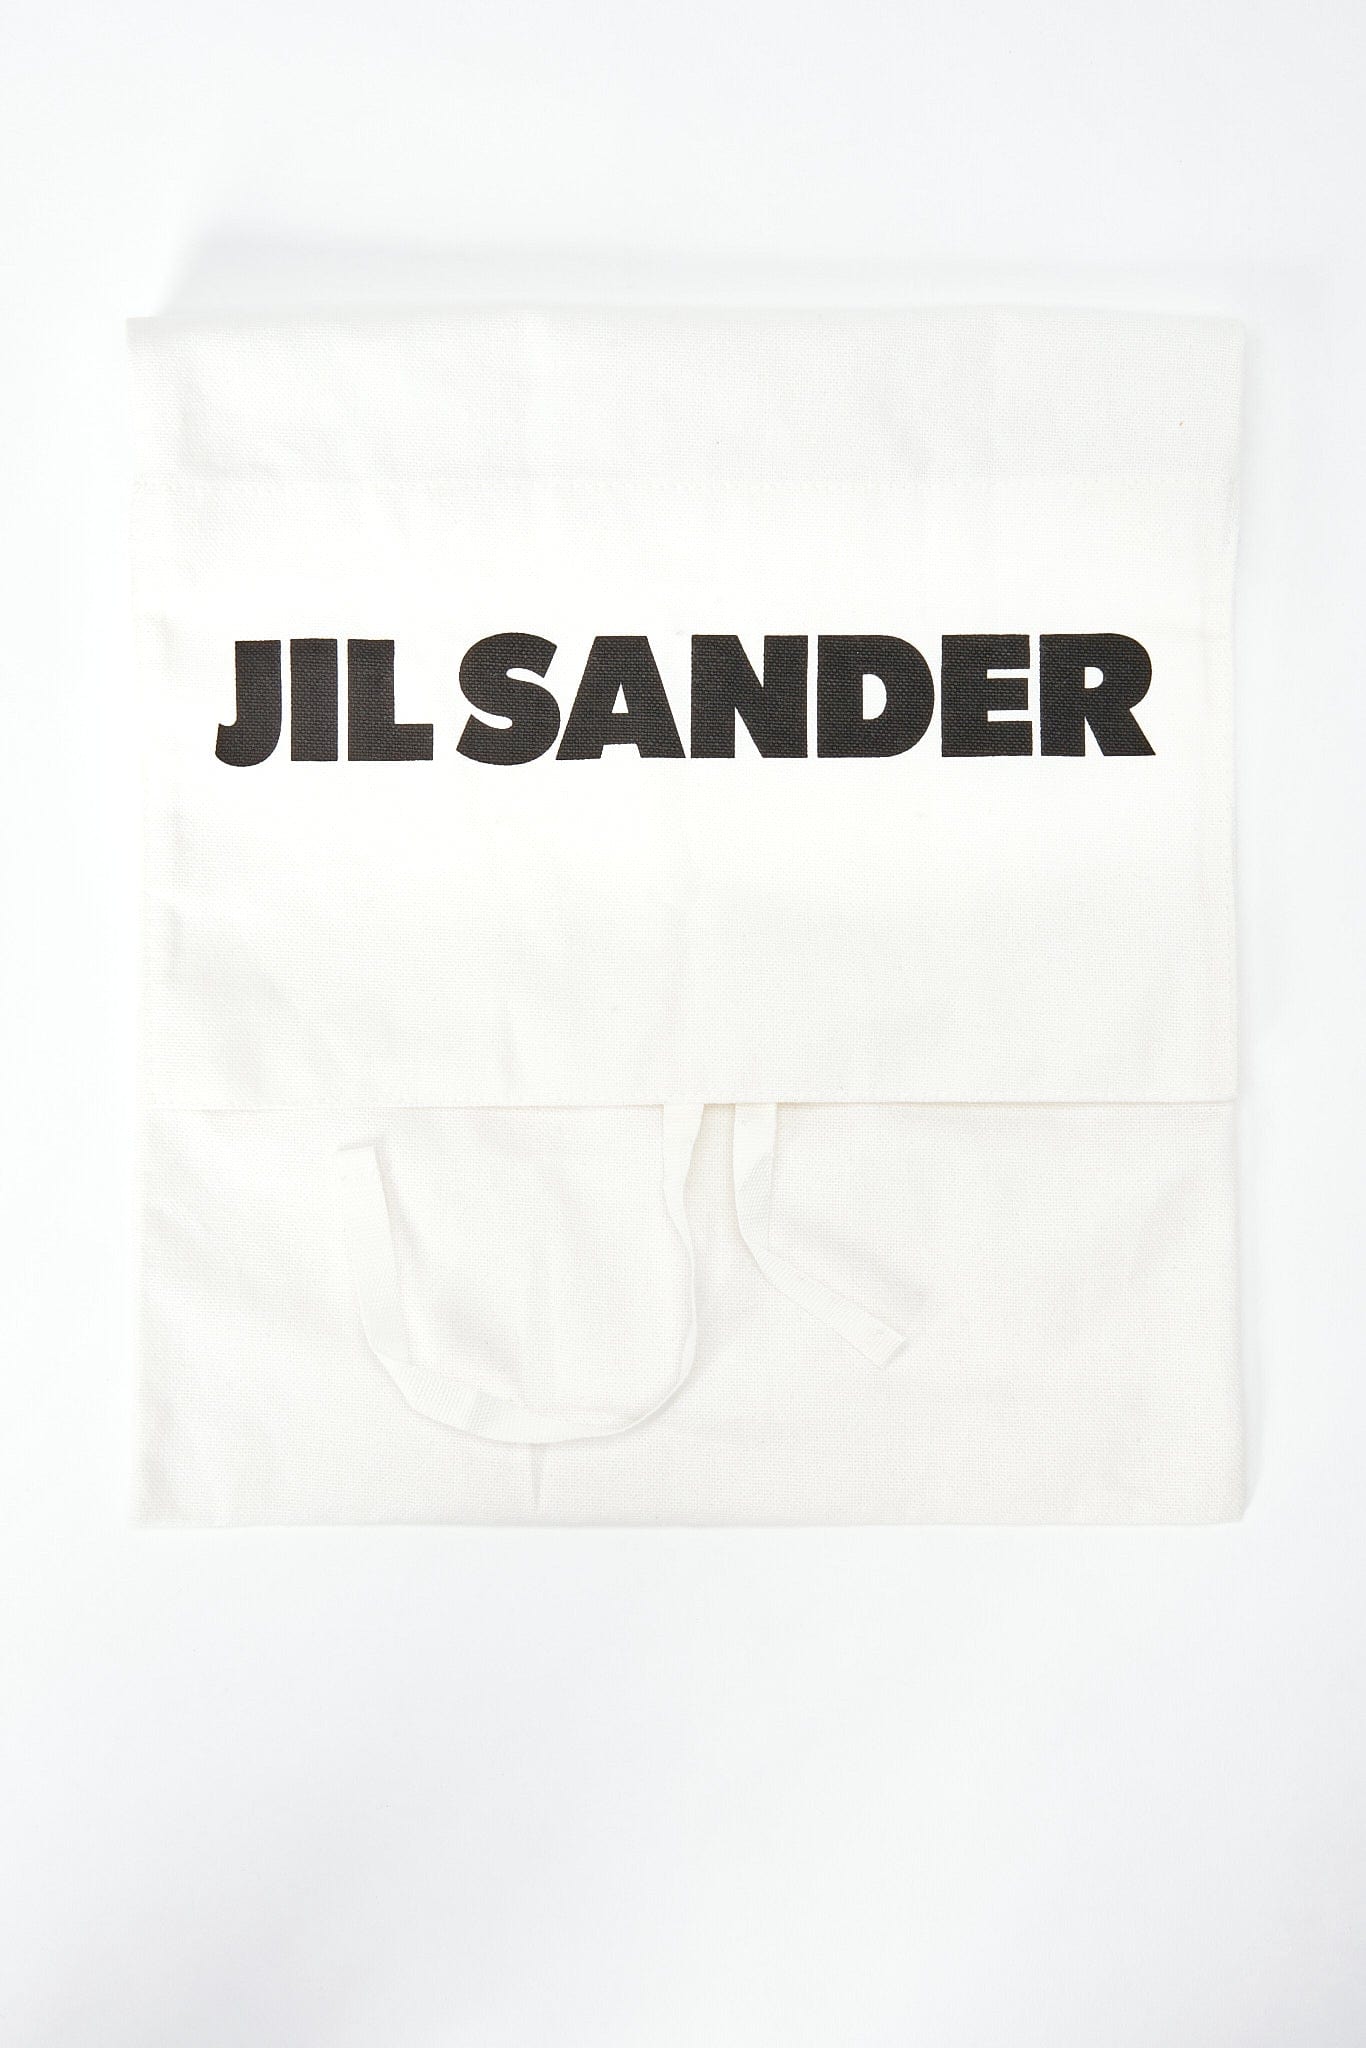 Jil Sander Half Moon Crossbody Bag - Black Leather